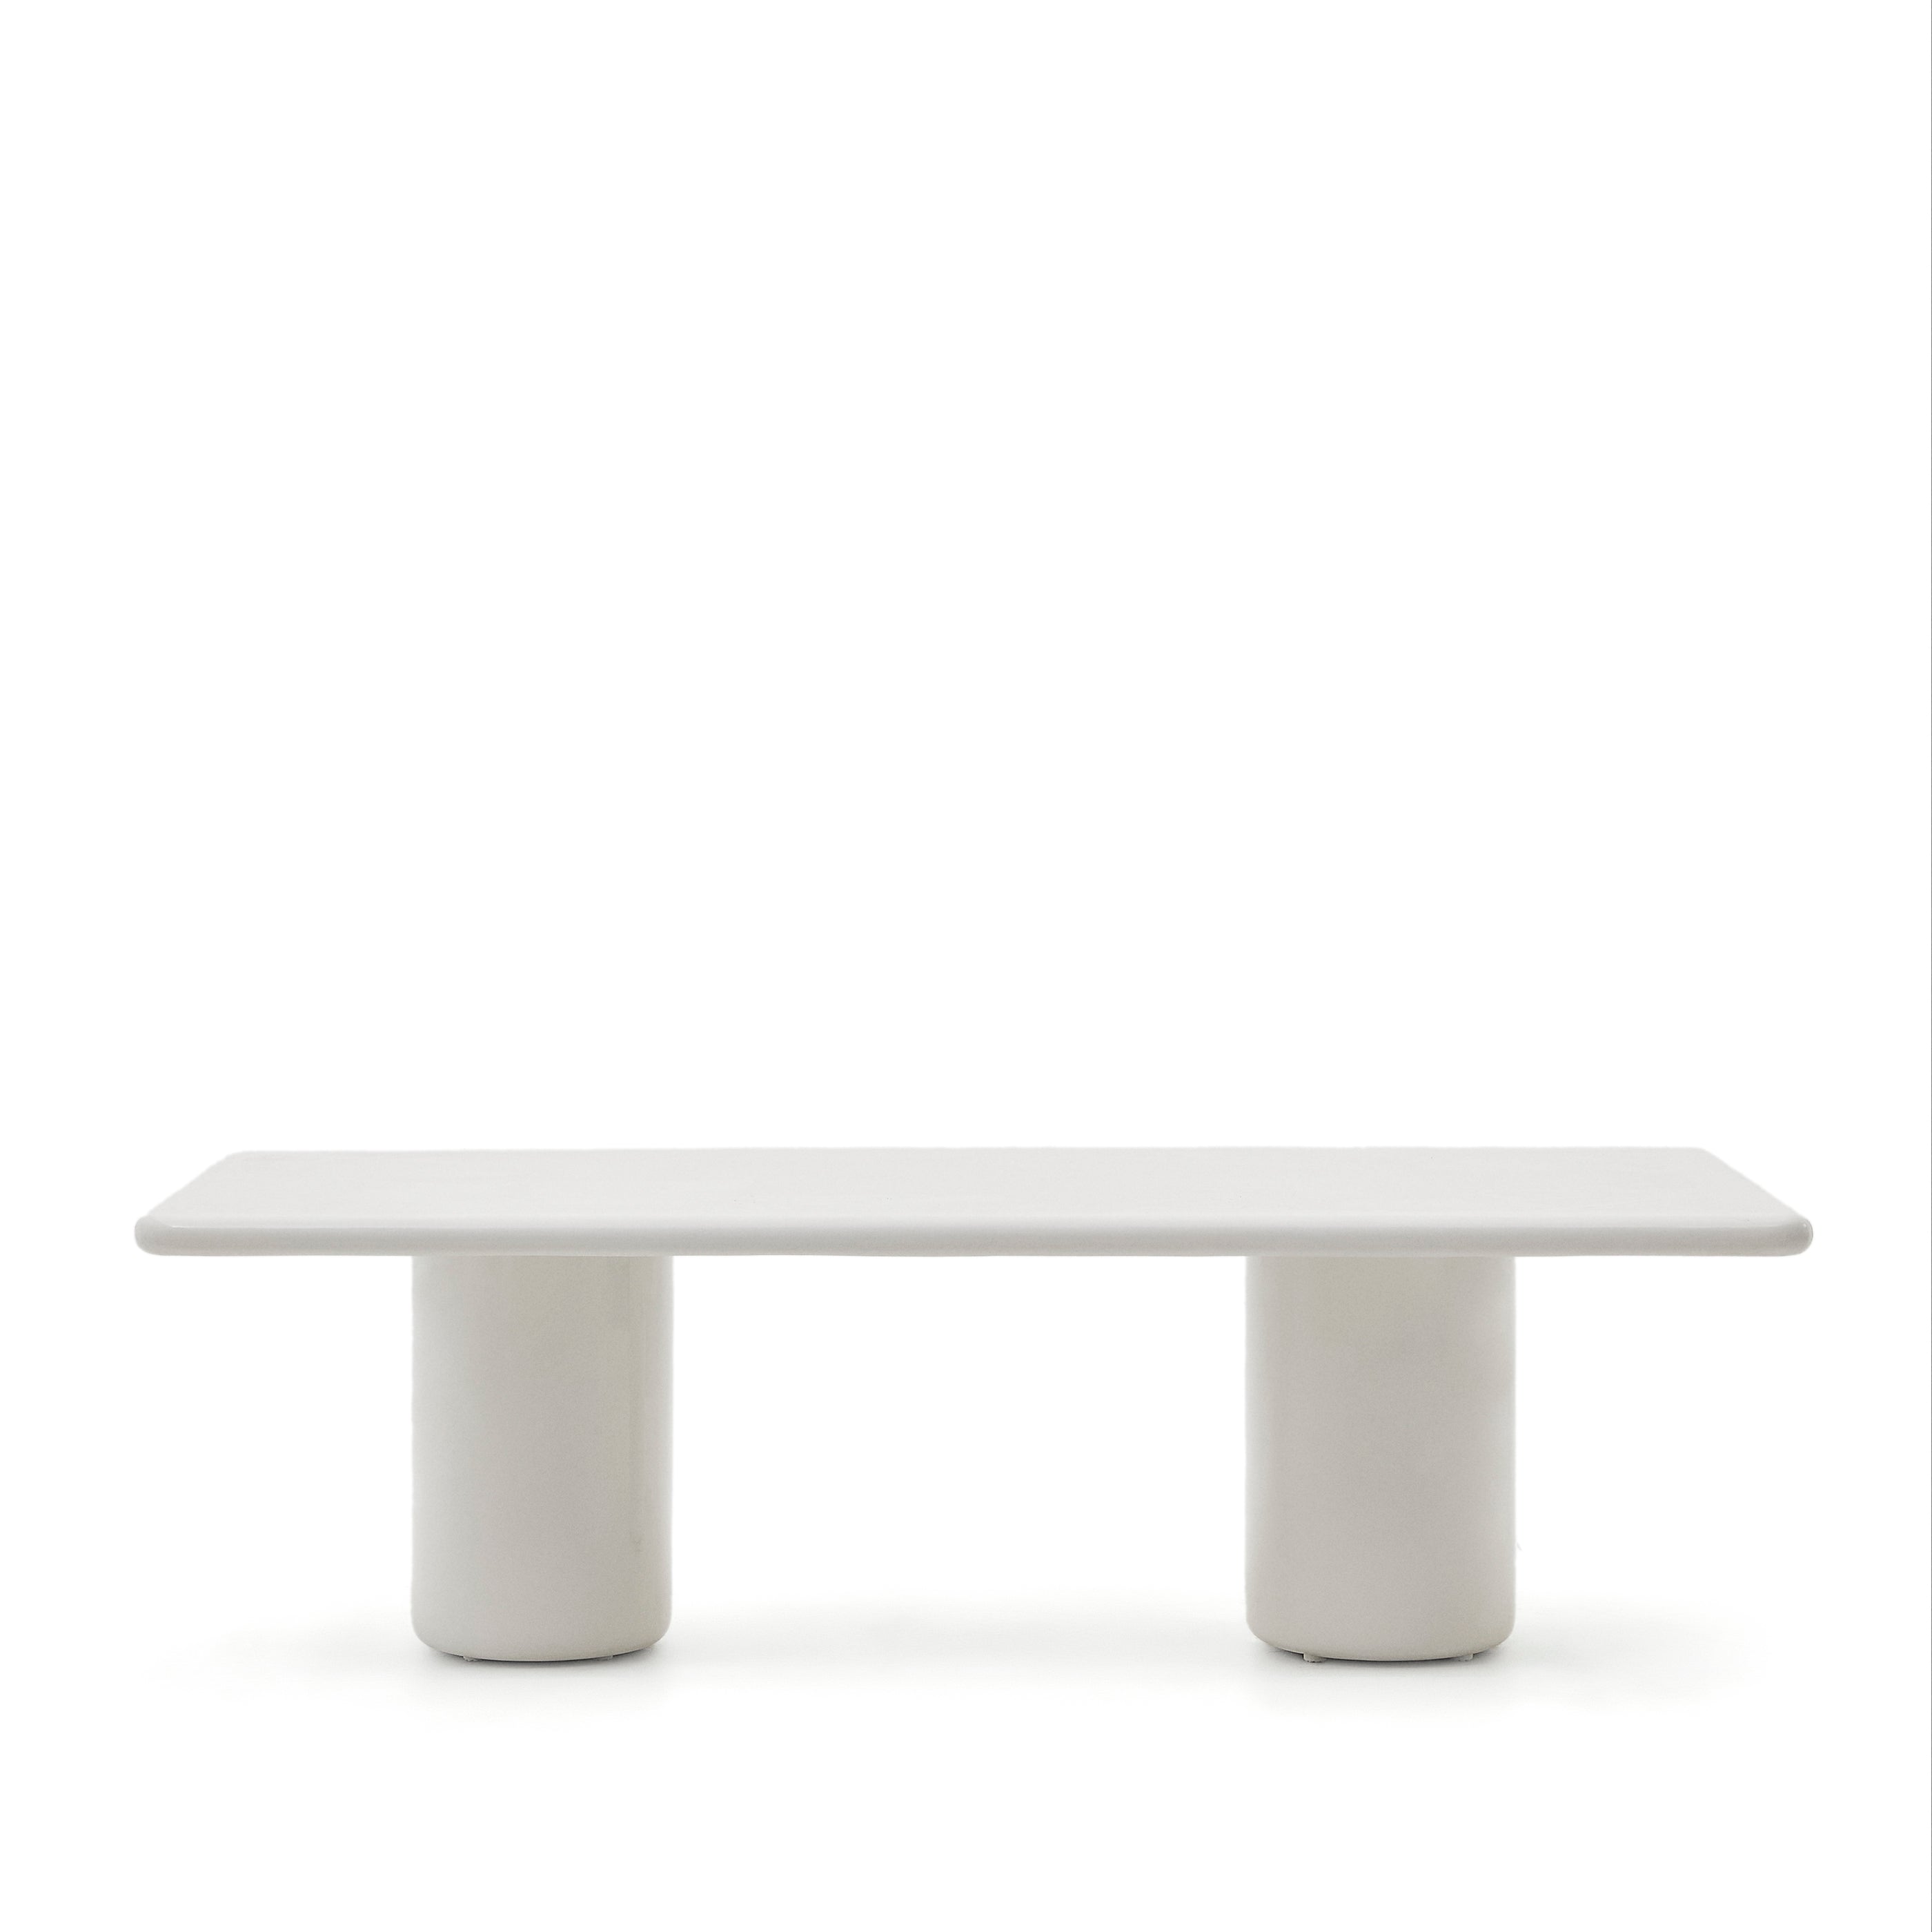 Canaret cement asztal fényes fehér befejezéssel, 239 cm x 102 cm